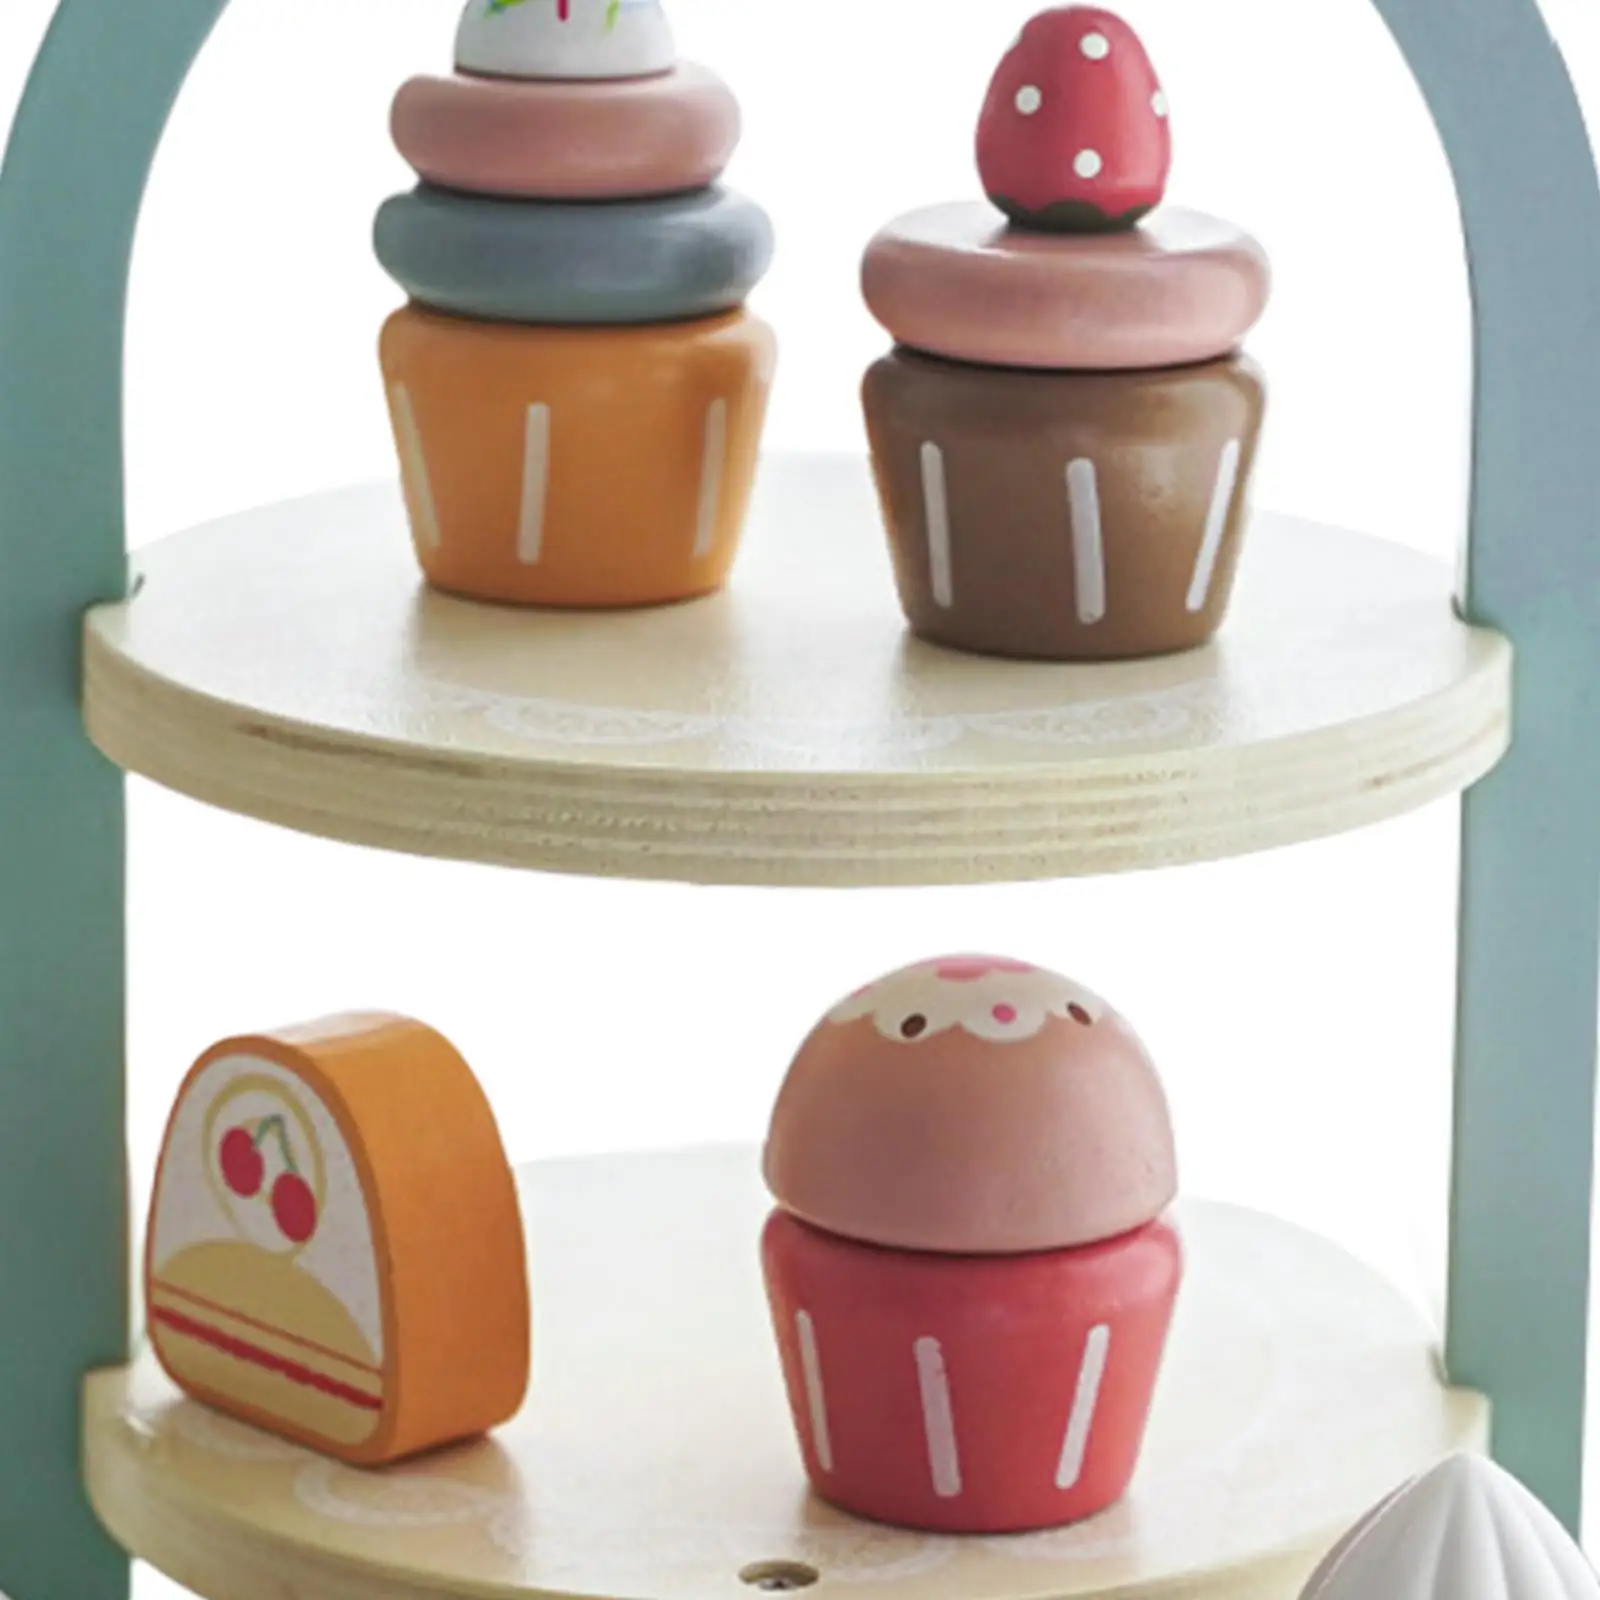 Wooden Dessert Set Cupcake Set Colorful Cookies for Children Developmental Toy